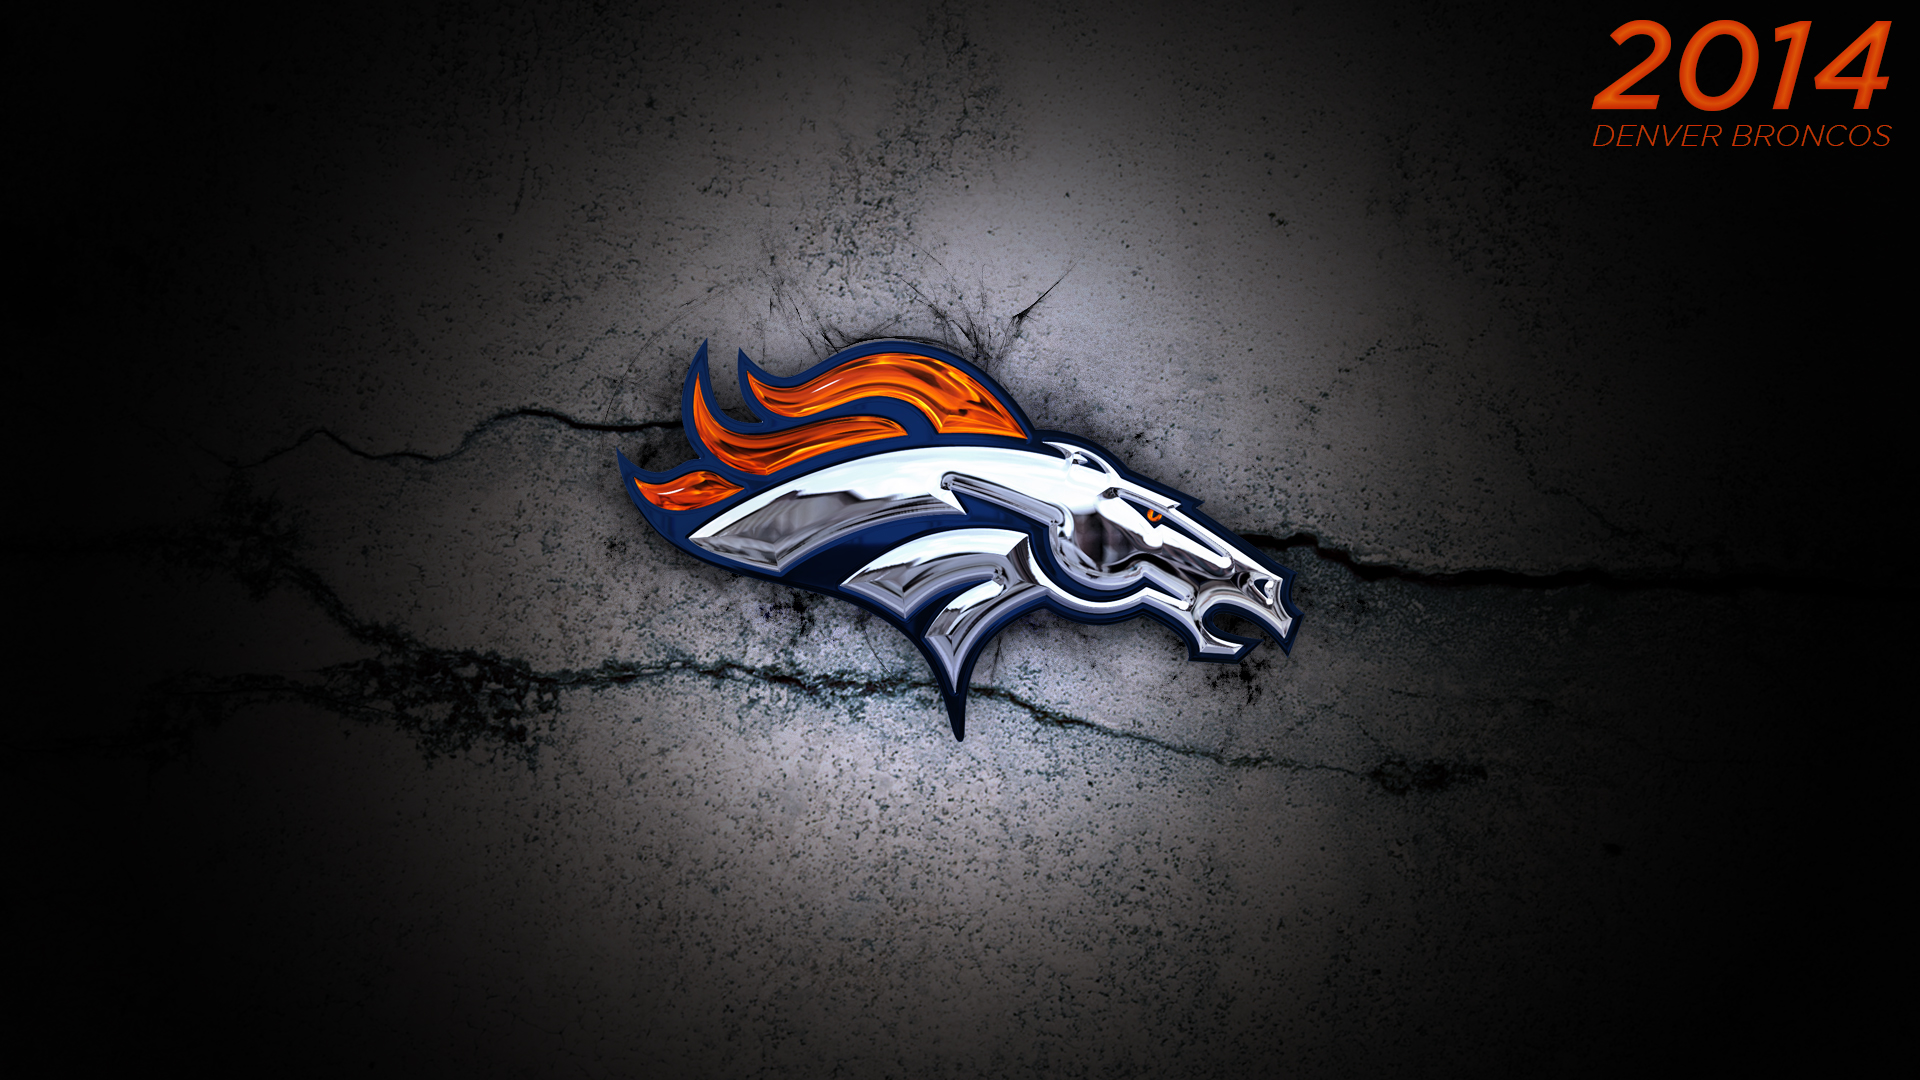 Denver Broncos Wallpaper 2014 Schedule 2014 denver broncos logo 1920x1080